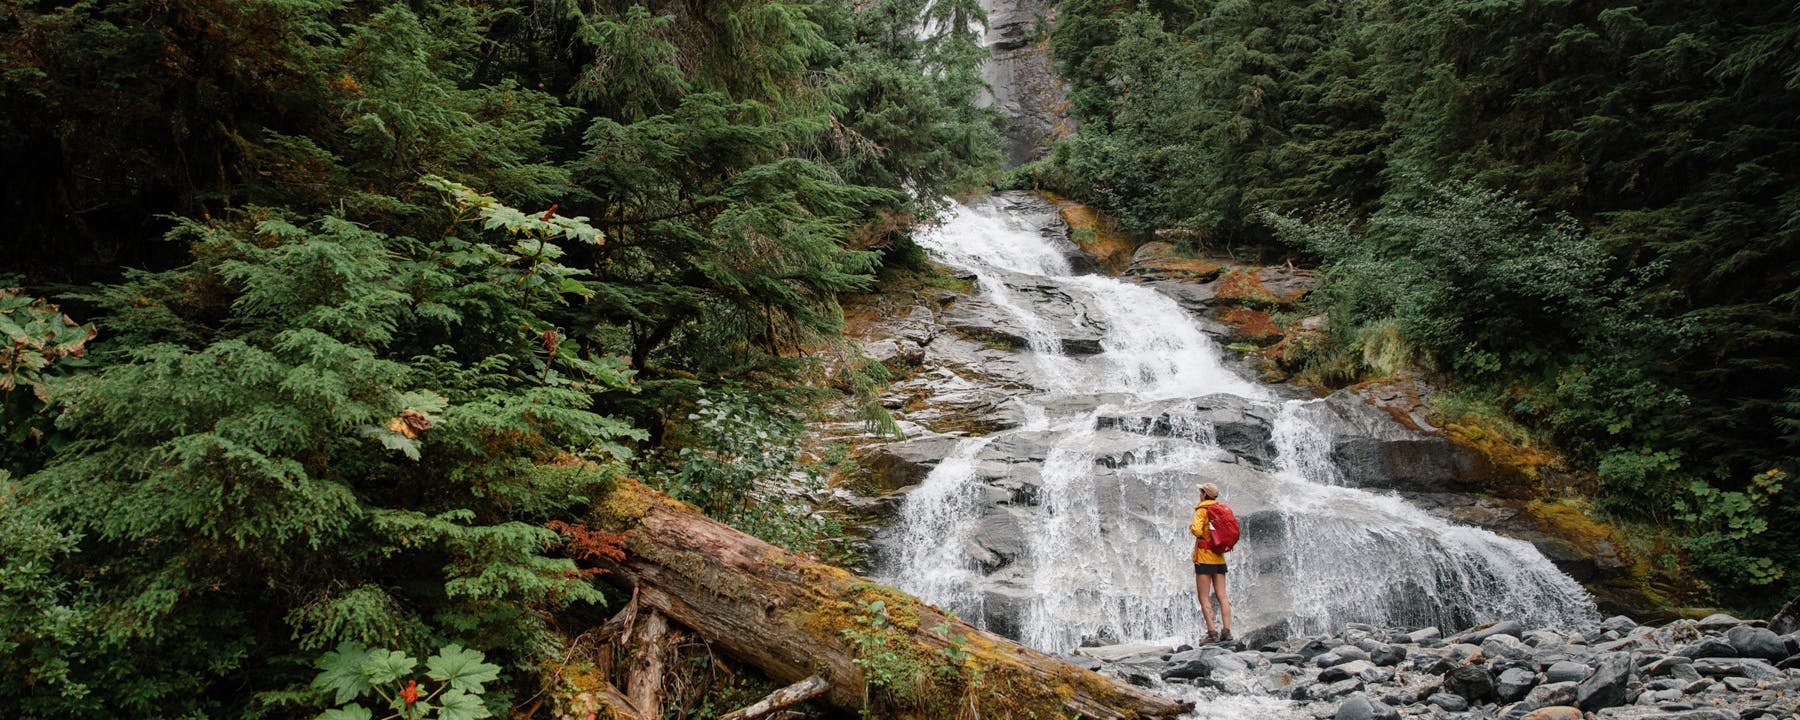 Hidden gems: 4 BC waterfalls worth a road trip stop